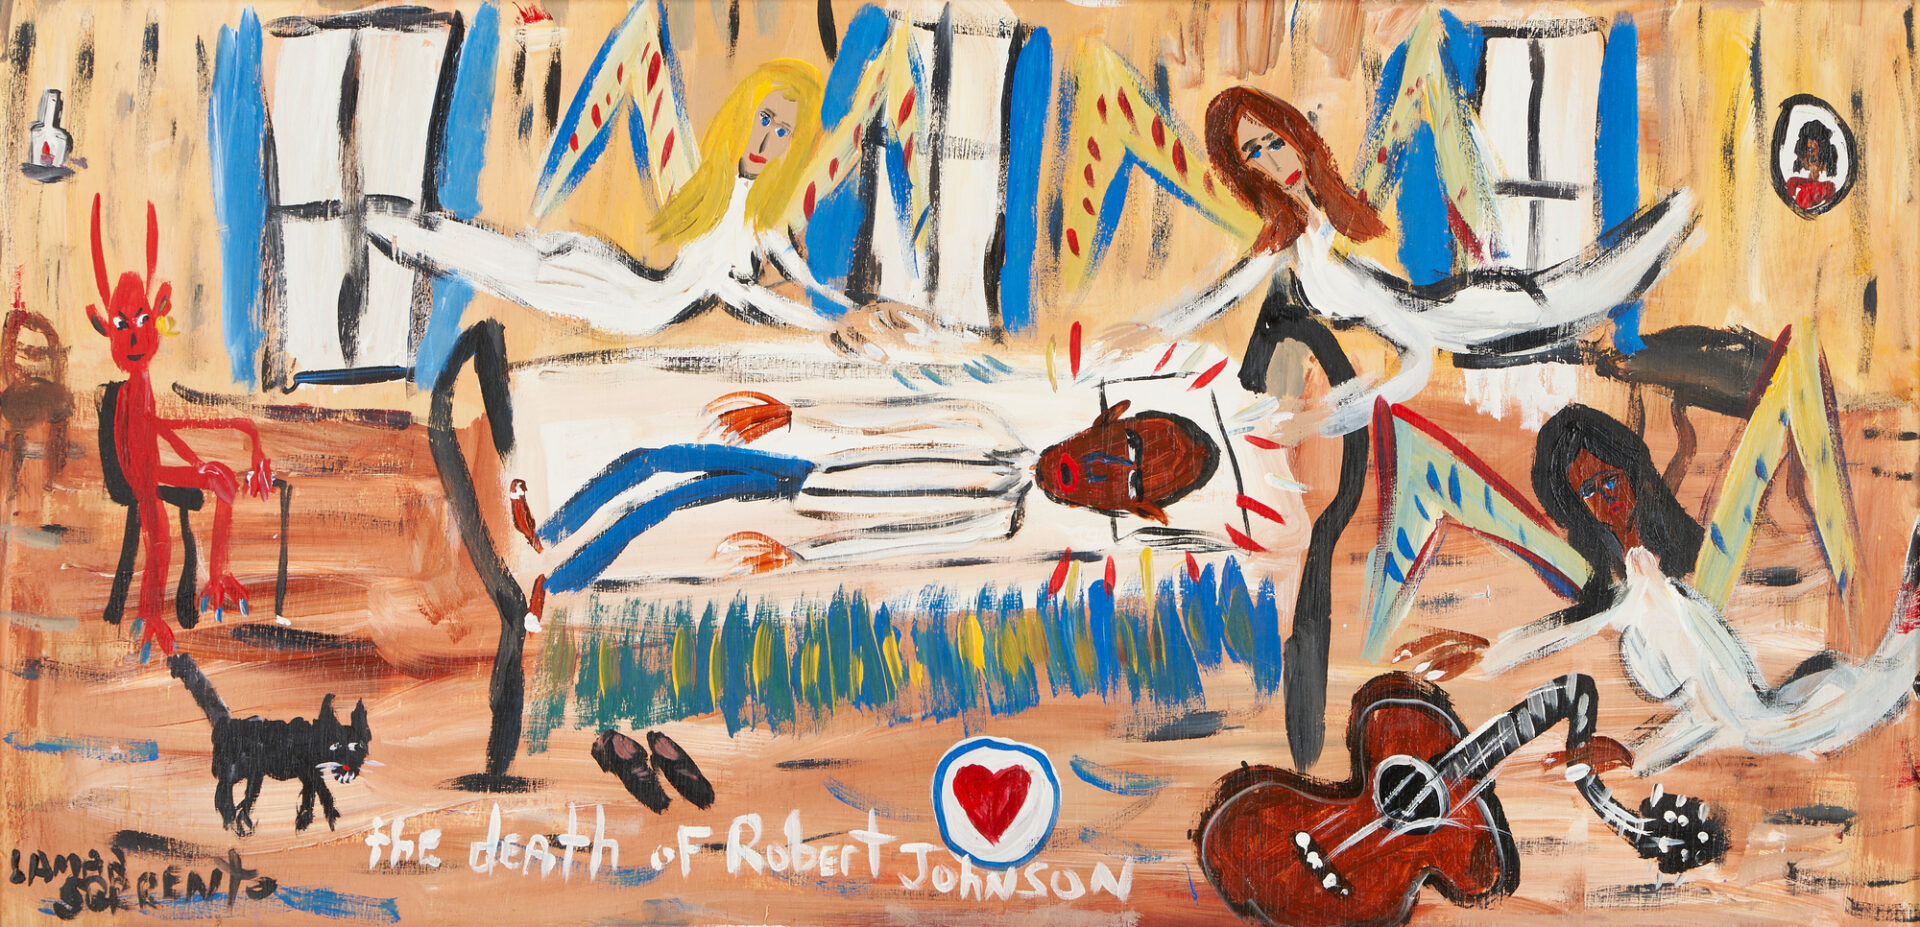 Lot 177: Lamar Sorrento, O/B Painting, Death of Robert Johnson